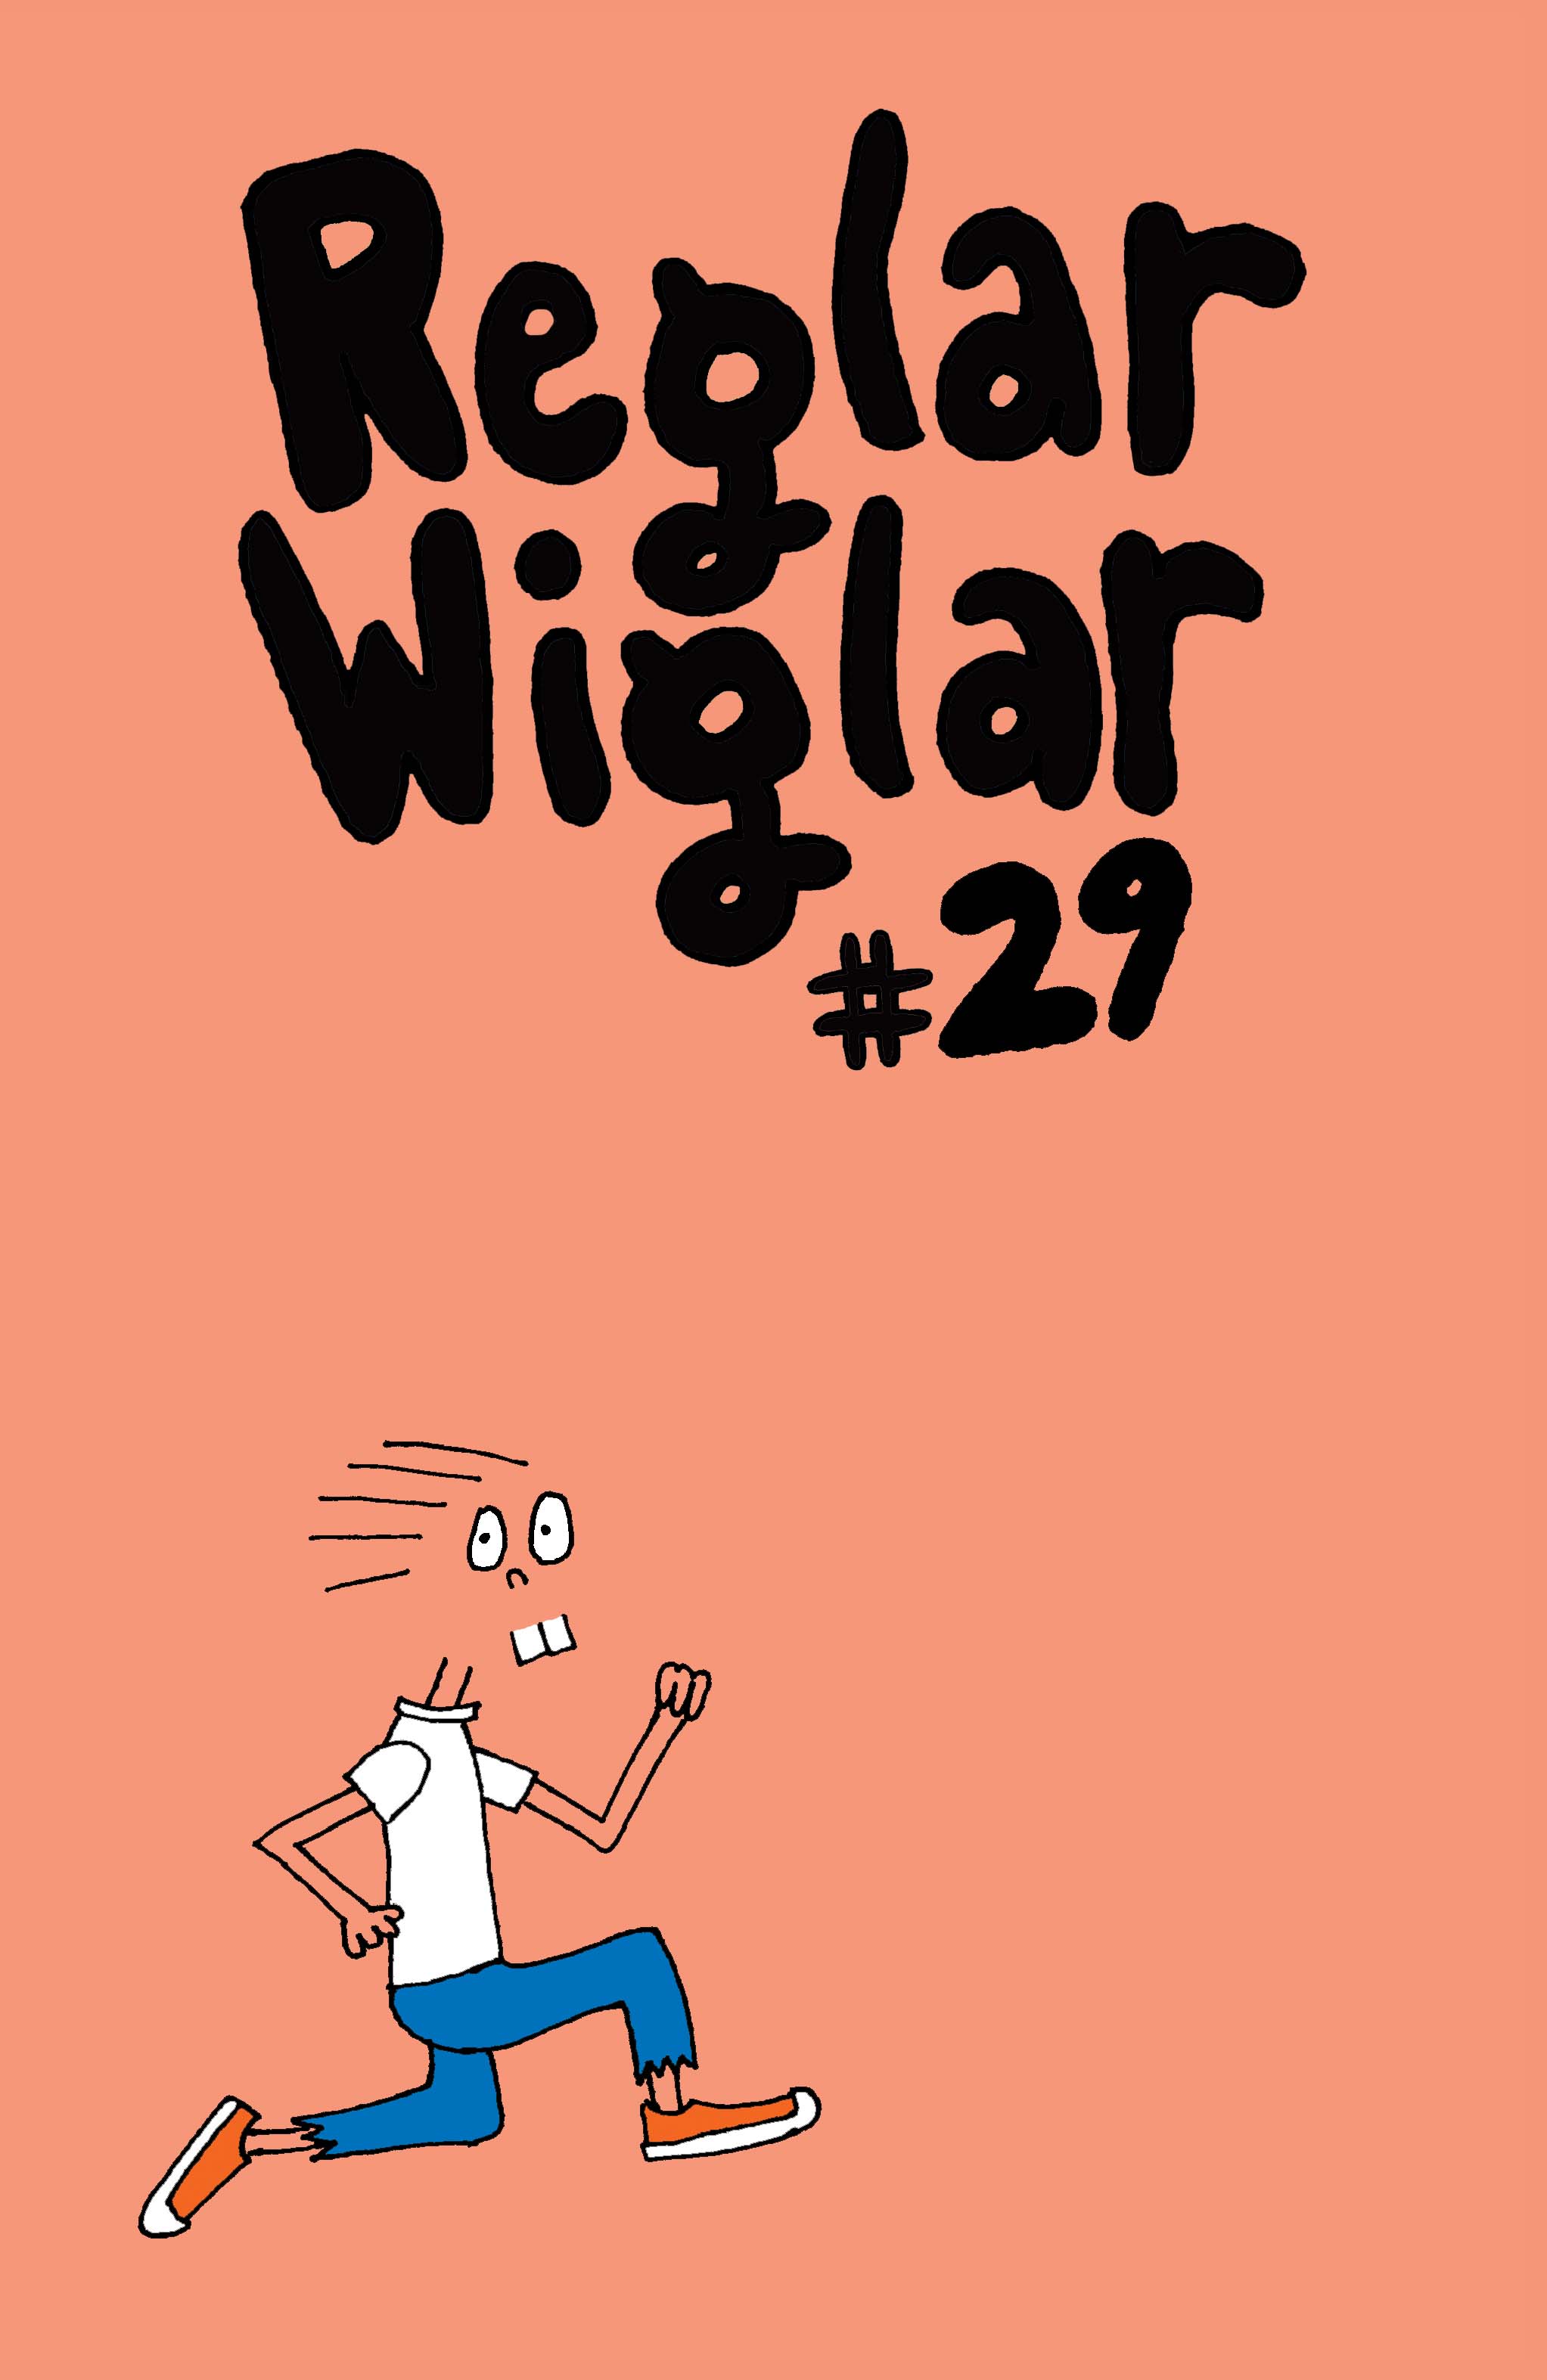 Alwasy read Reglar Wiglar